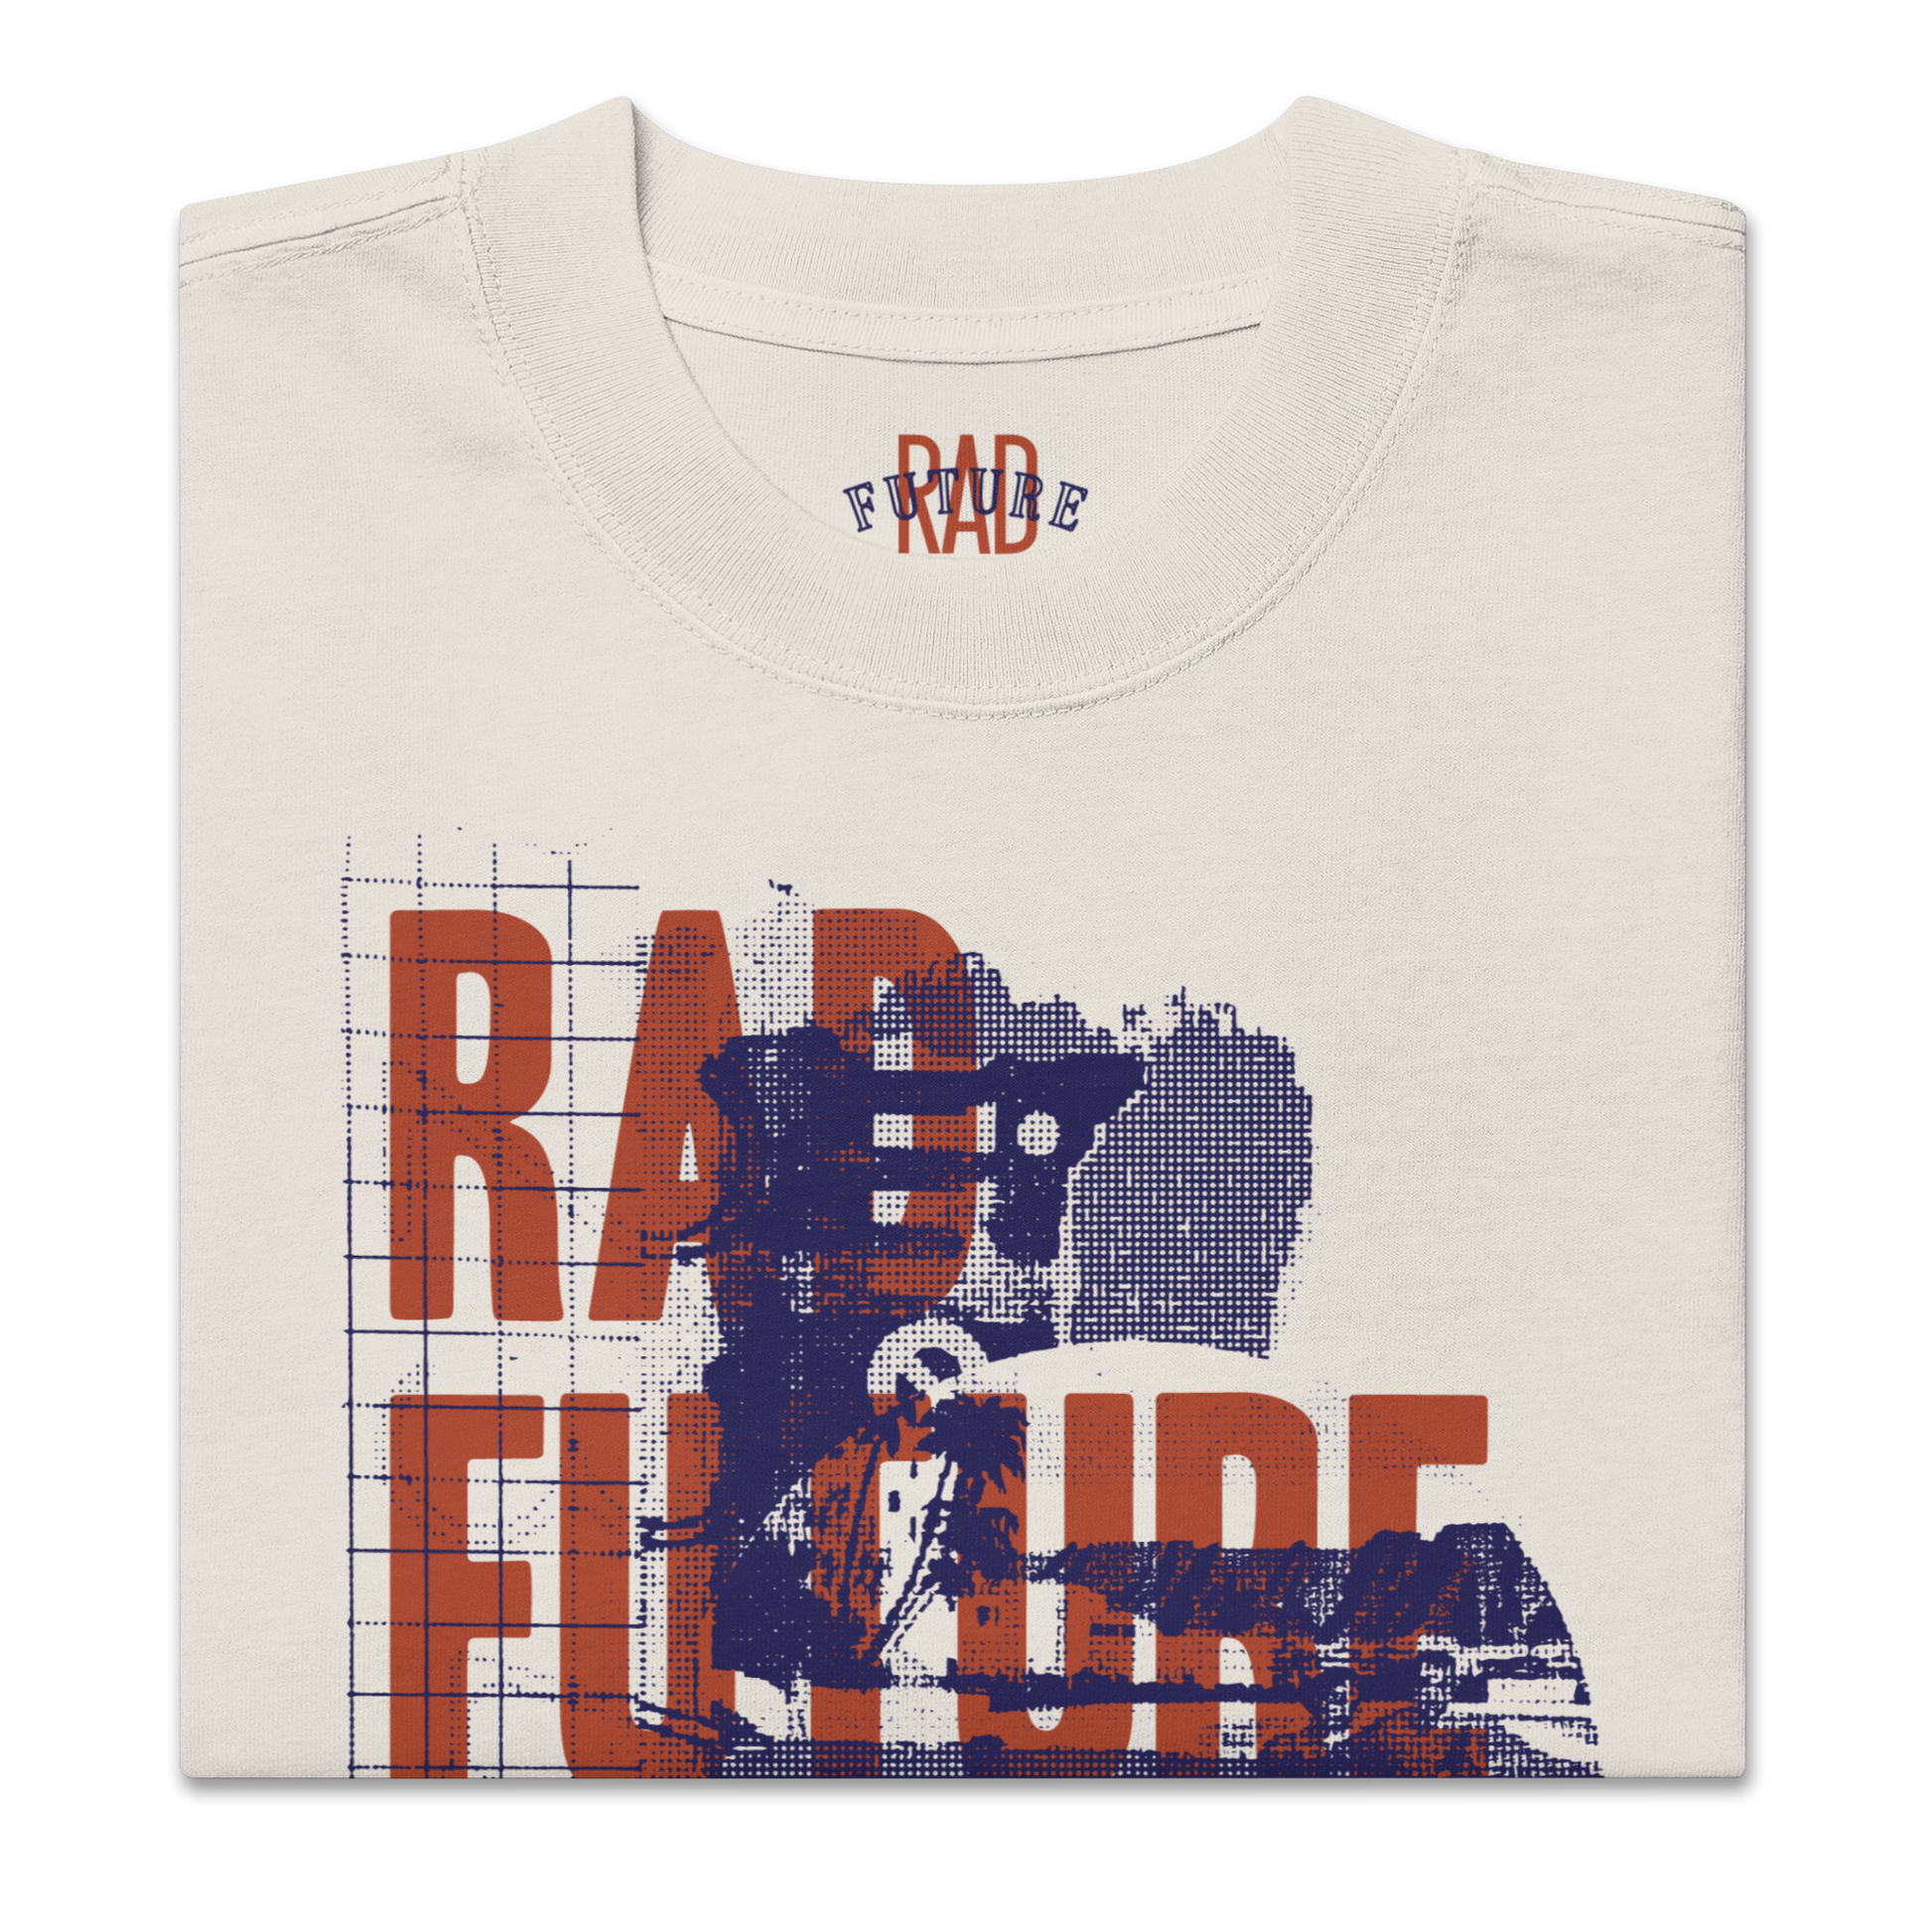 Oversized faded t-shirt - Rad Future